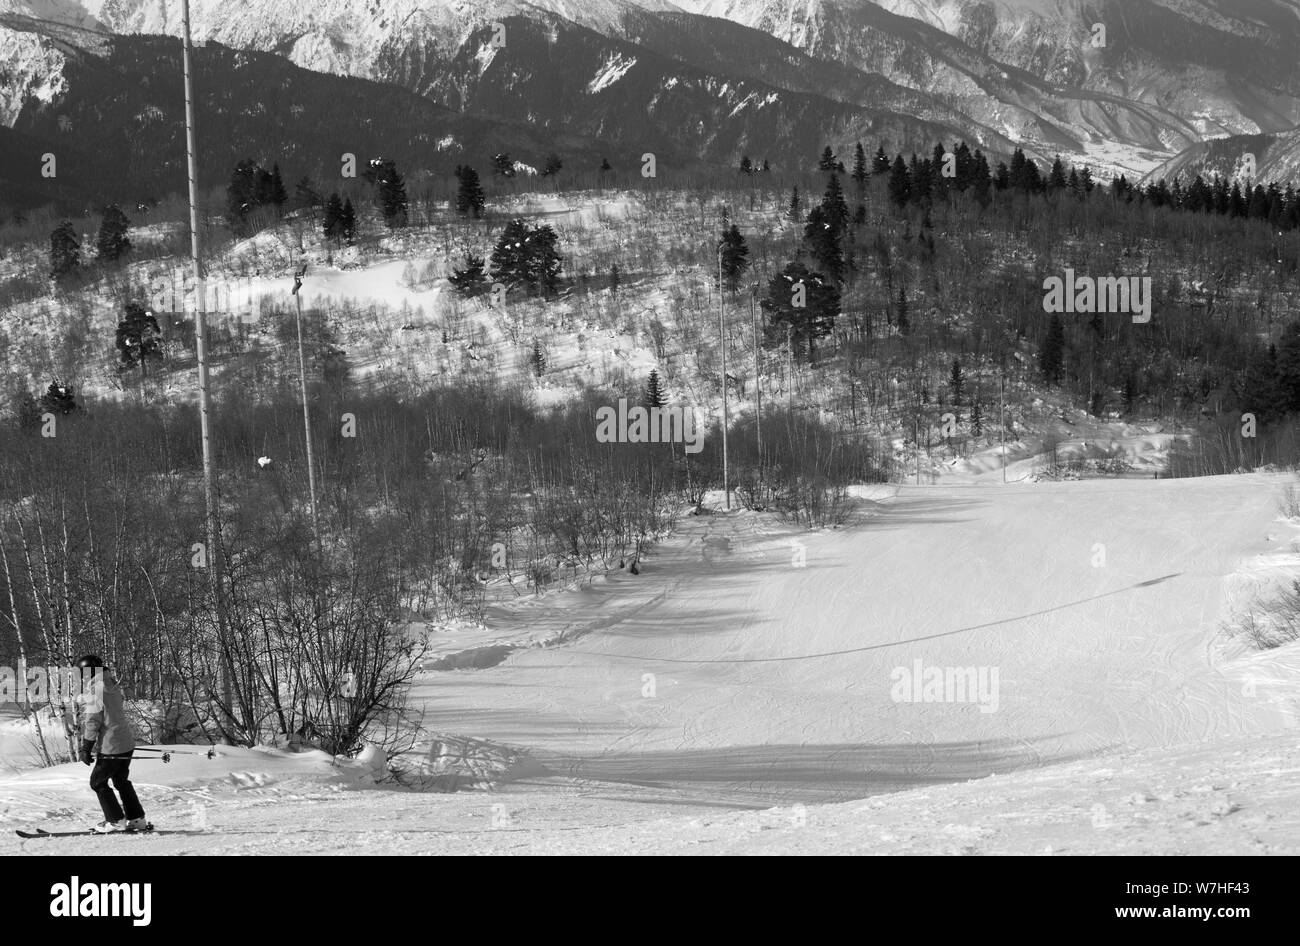 Skier downhill on snowy ski slope at sun winter day. Caucasus Mountains. Hatsvali, Svaneti region of Georgia. Black and white retro toned landscape. Stock Photo